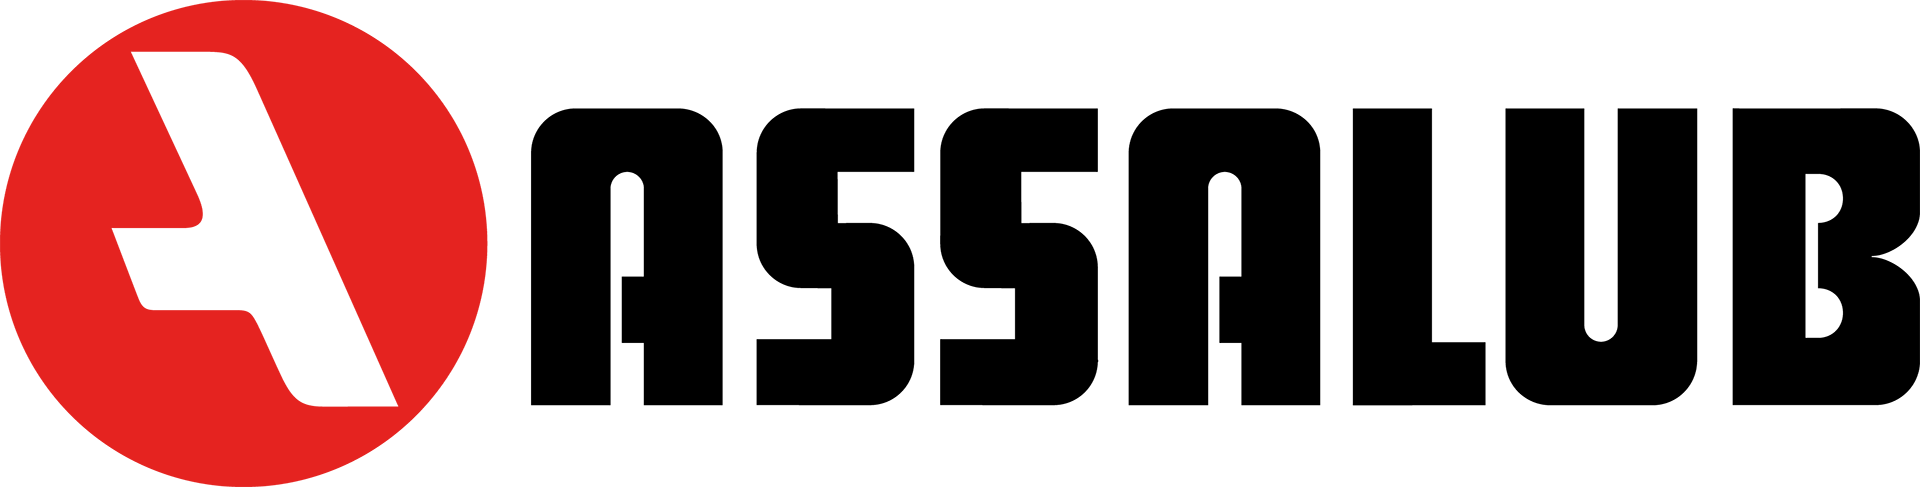 Assalub logo